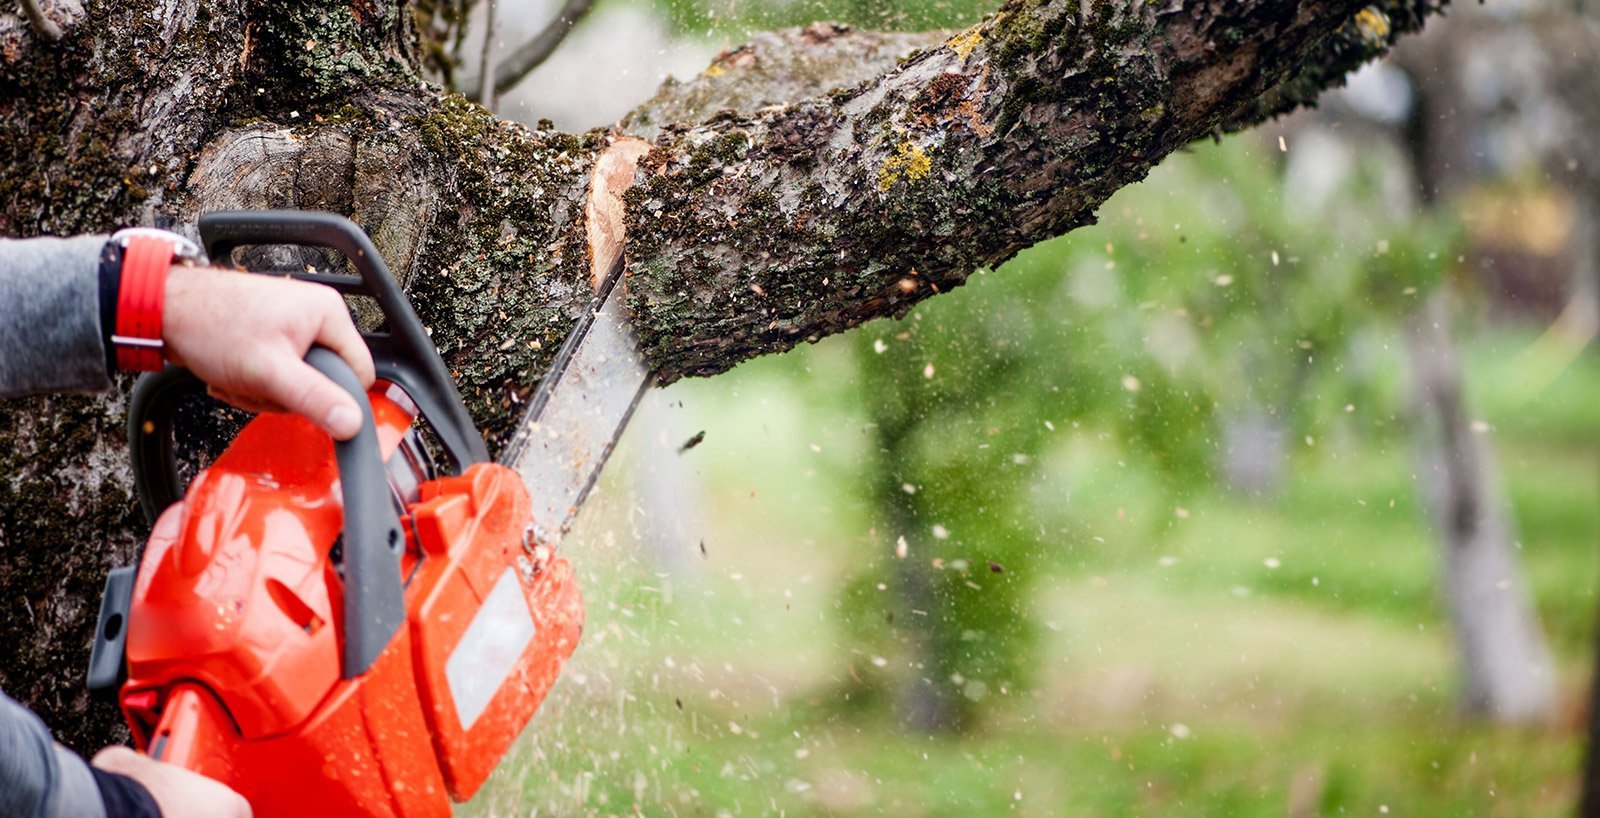 Chainsaw with orange body chopping off tree limb.